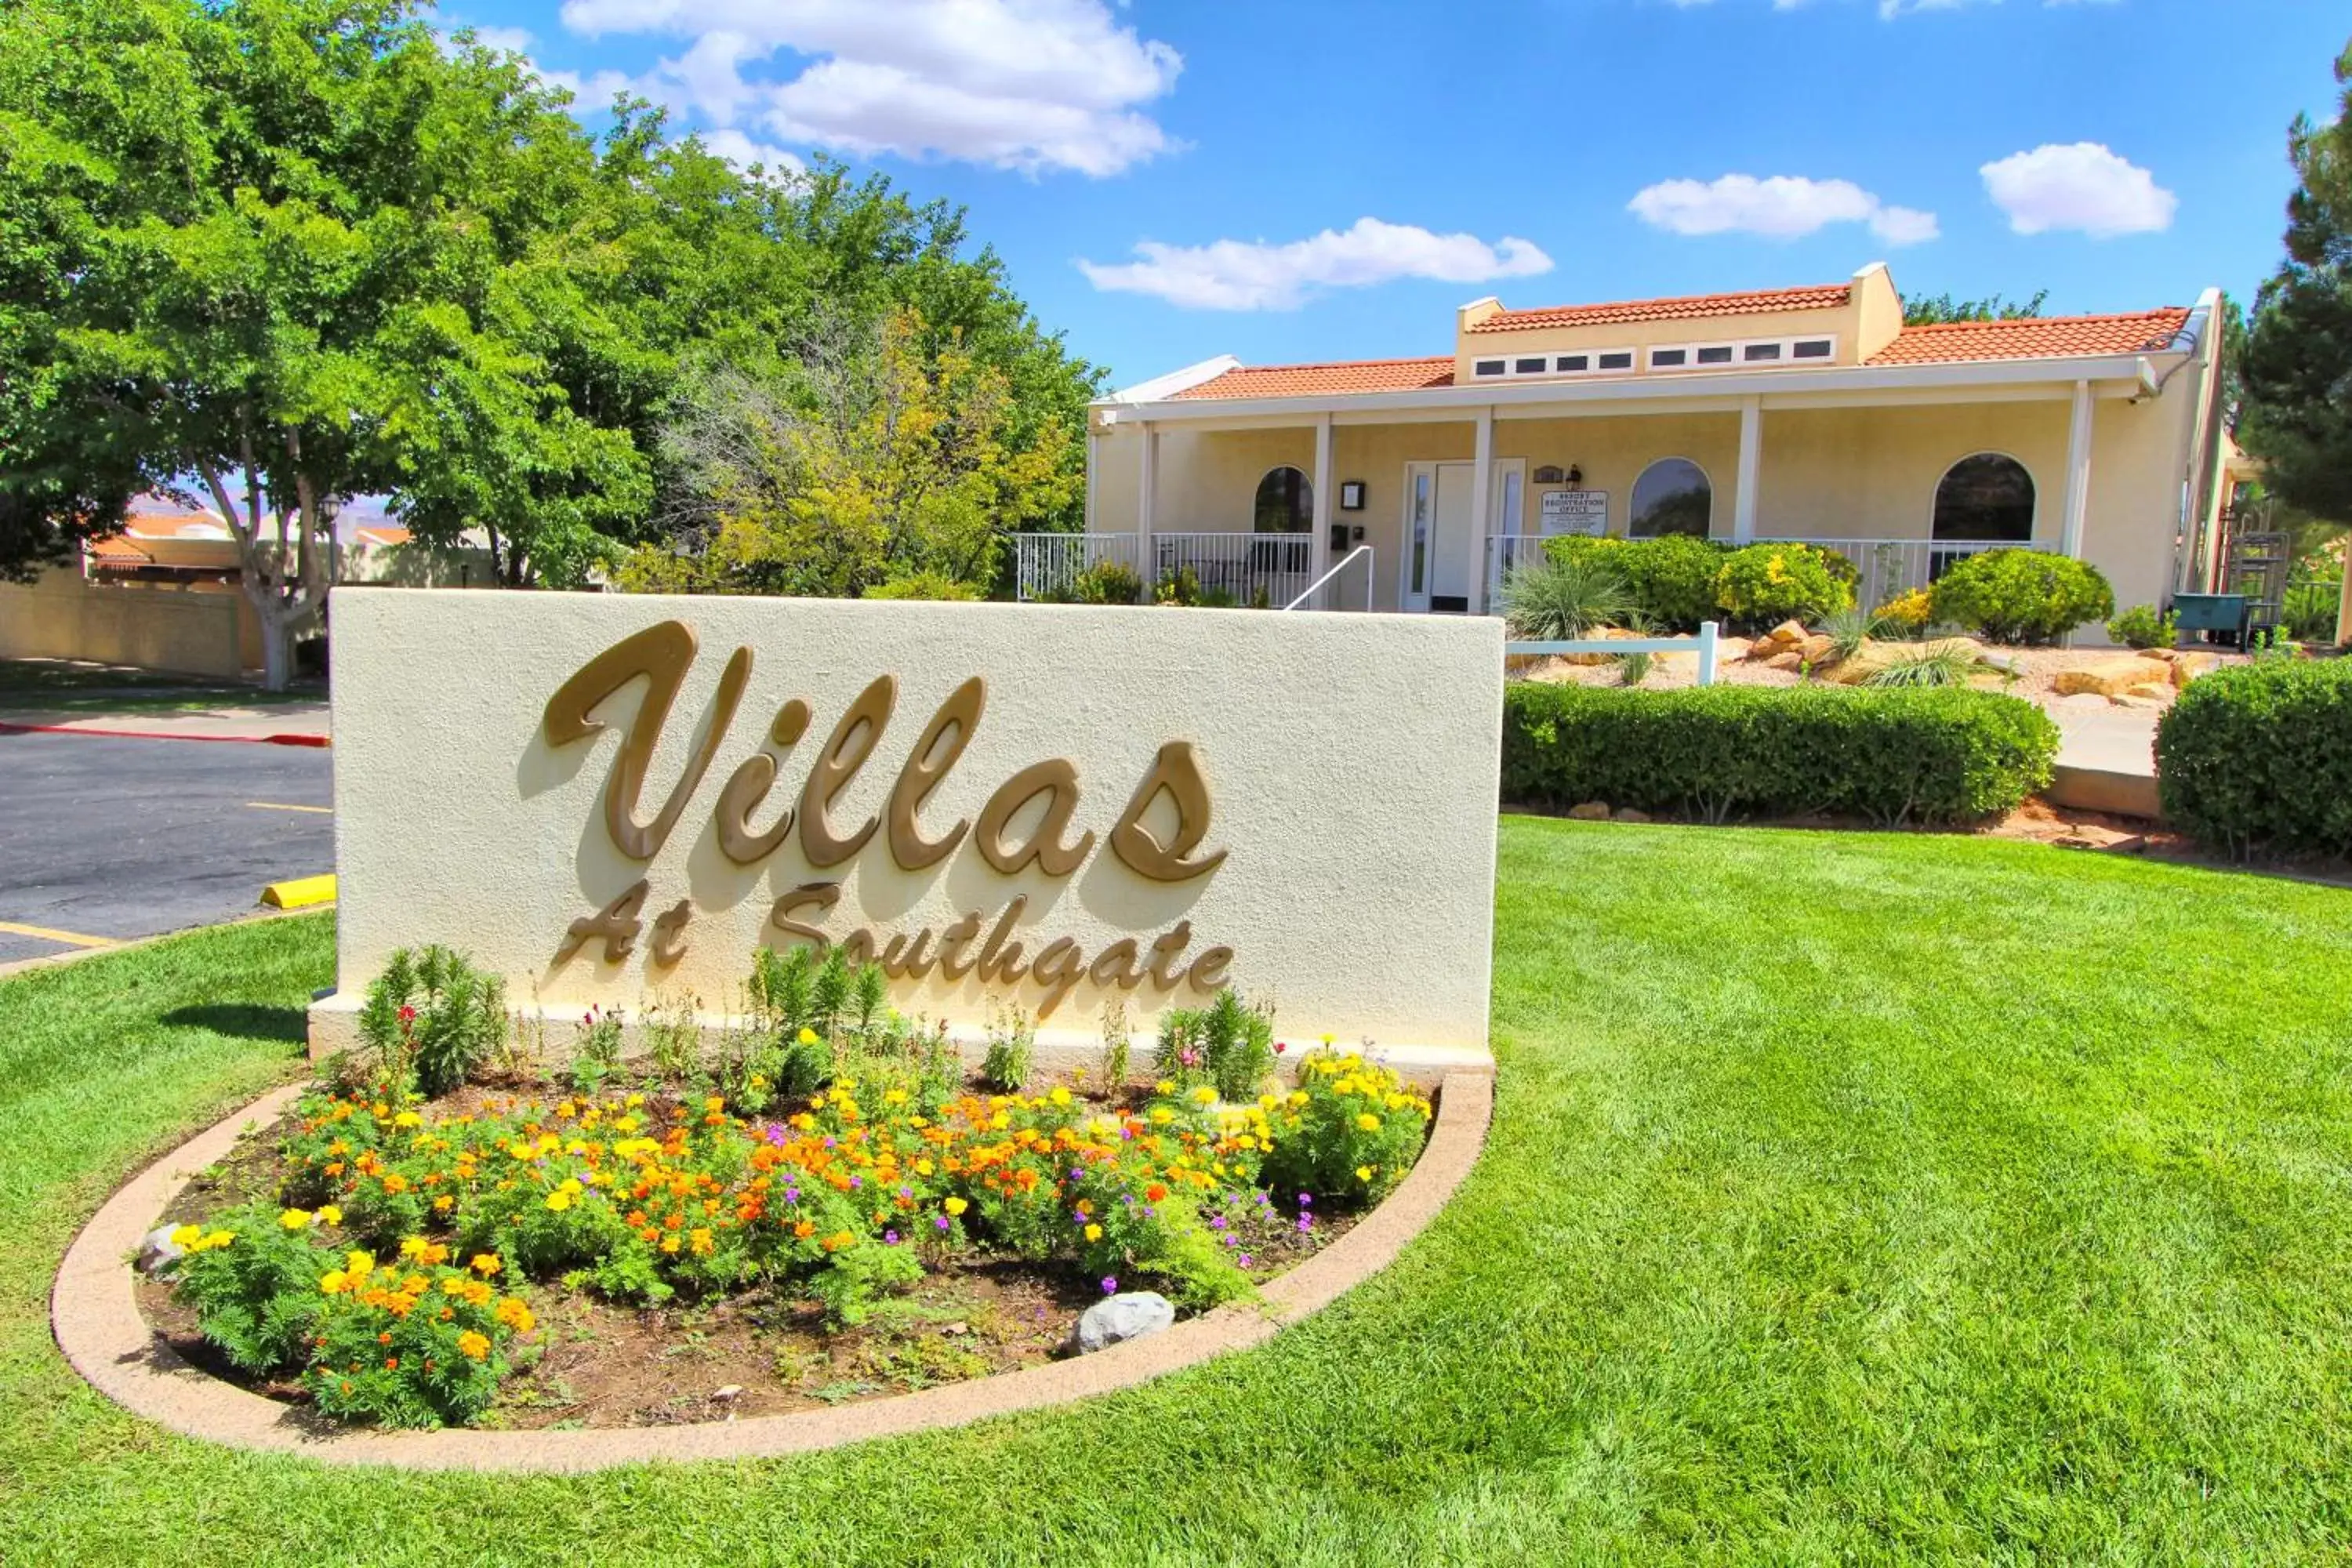 Property logo or sign in Villas at Southgate, a VRI resort